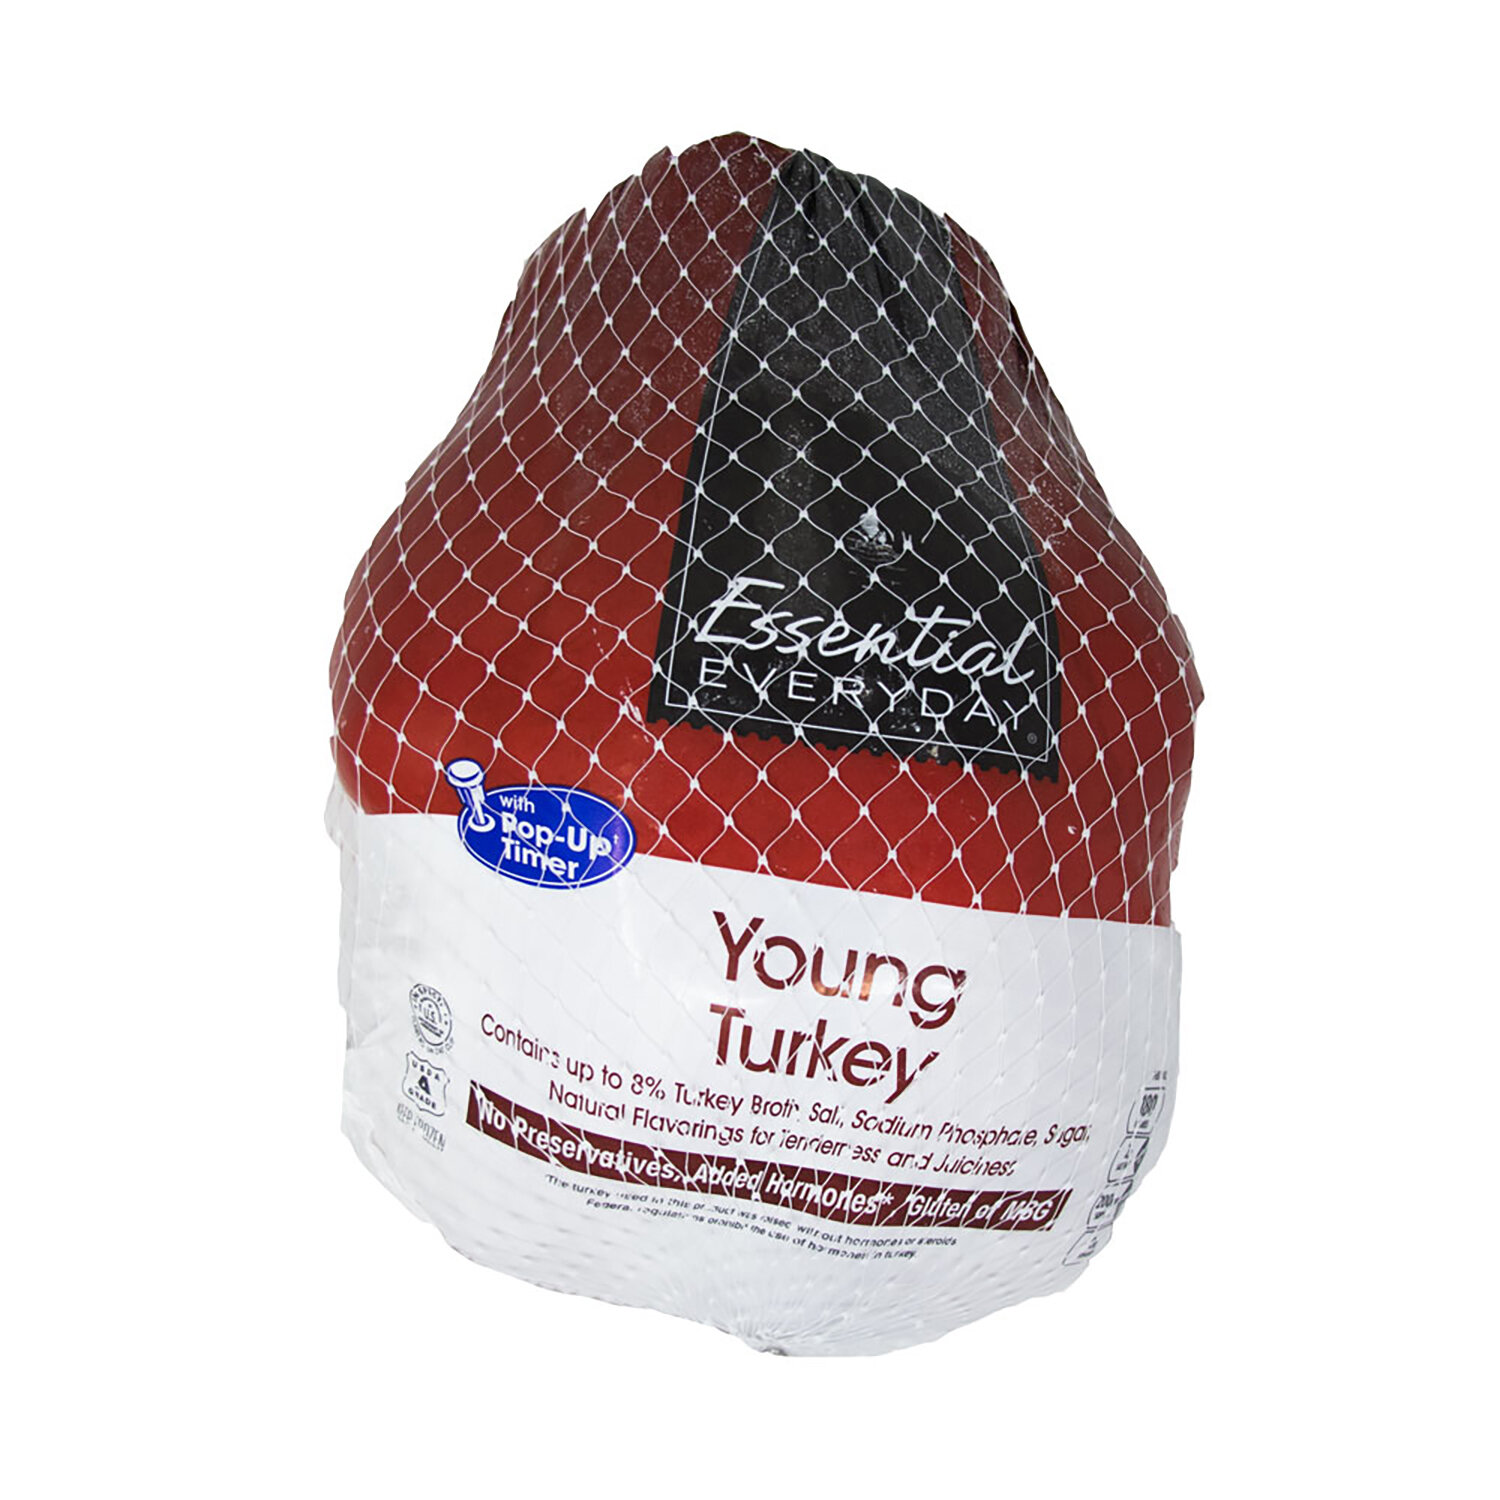 Premium Basted Young Turkey - Frozen - 10-16lbs - Price Per Lb